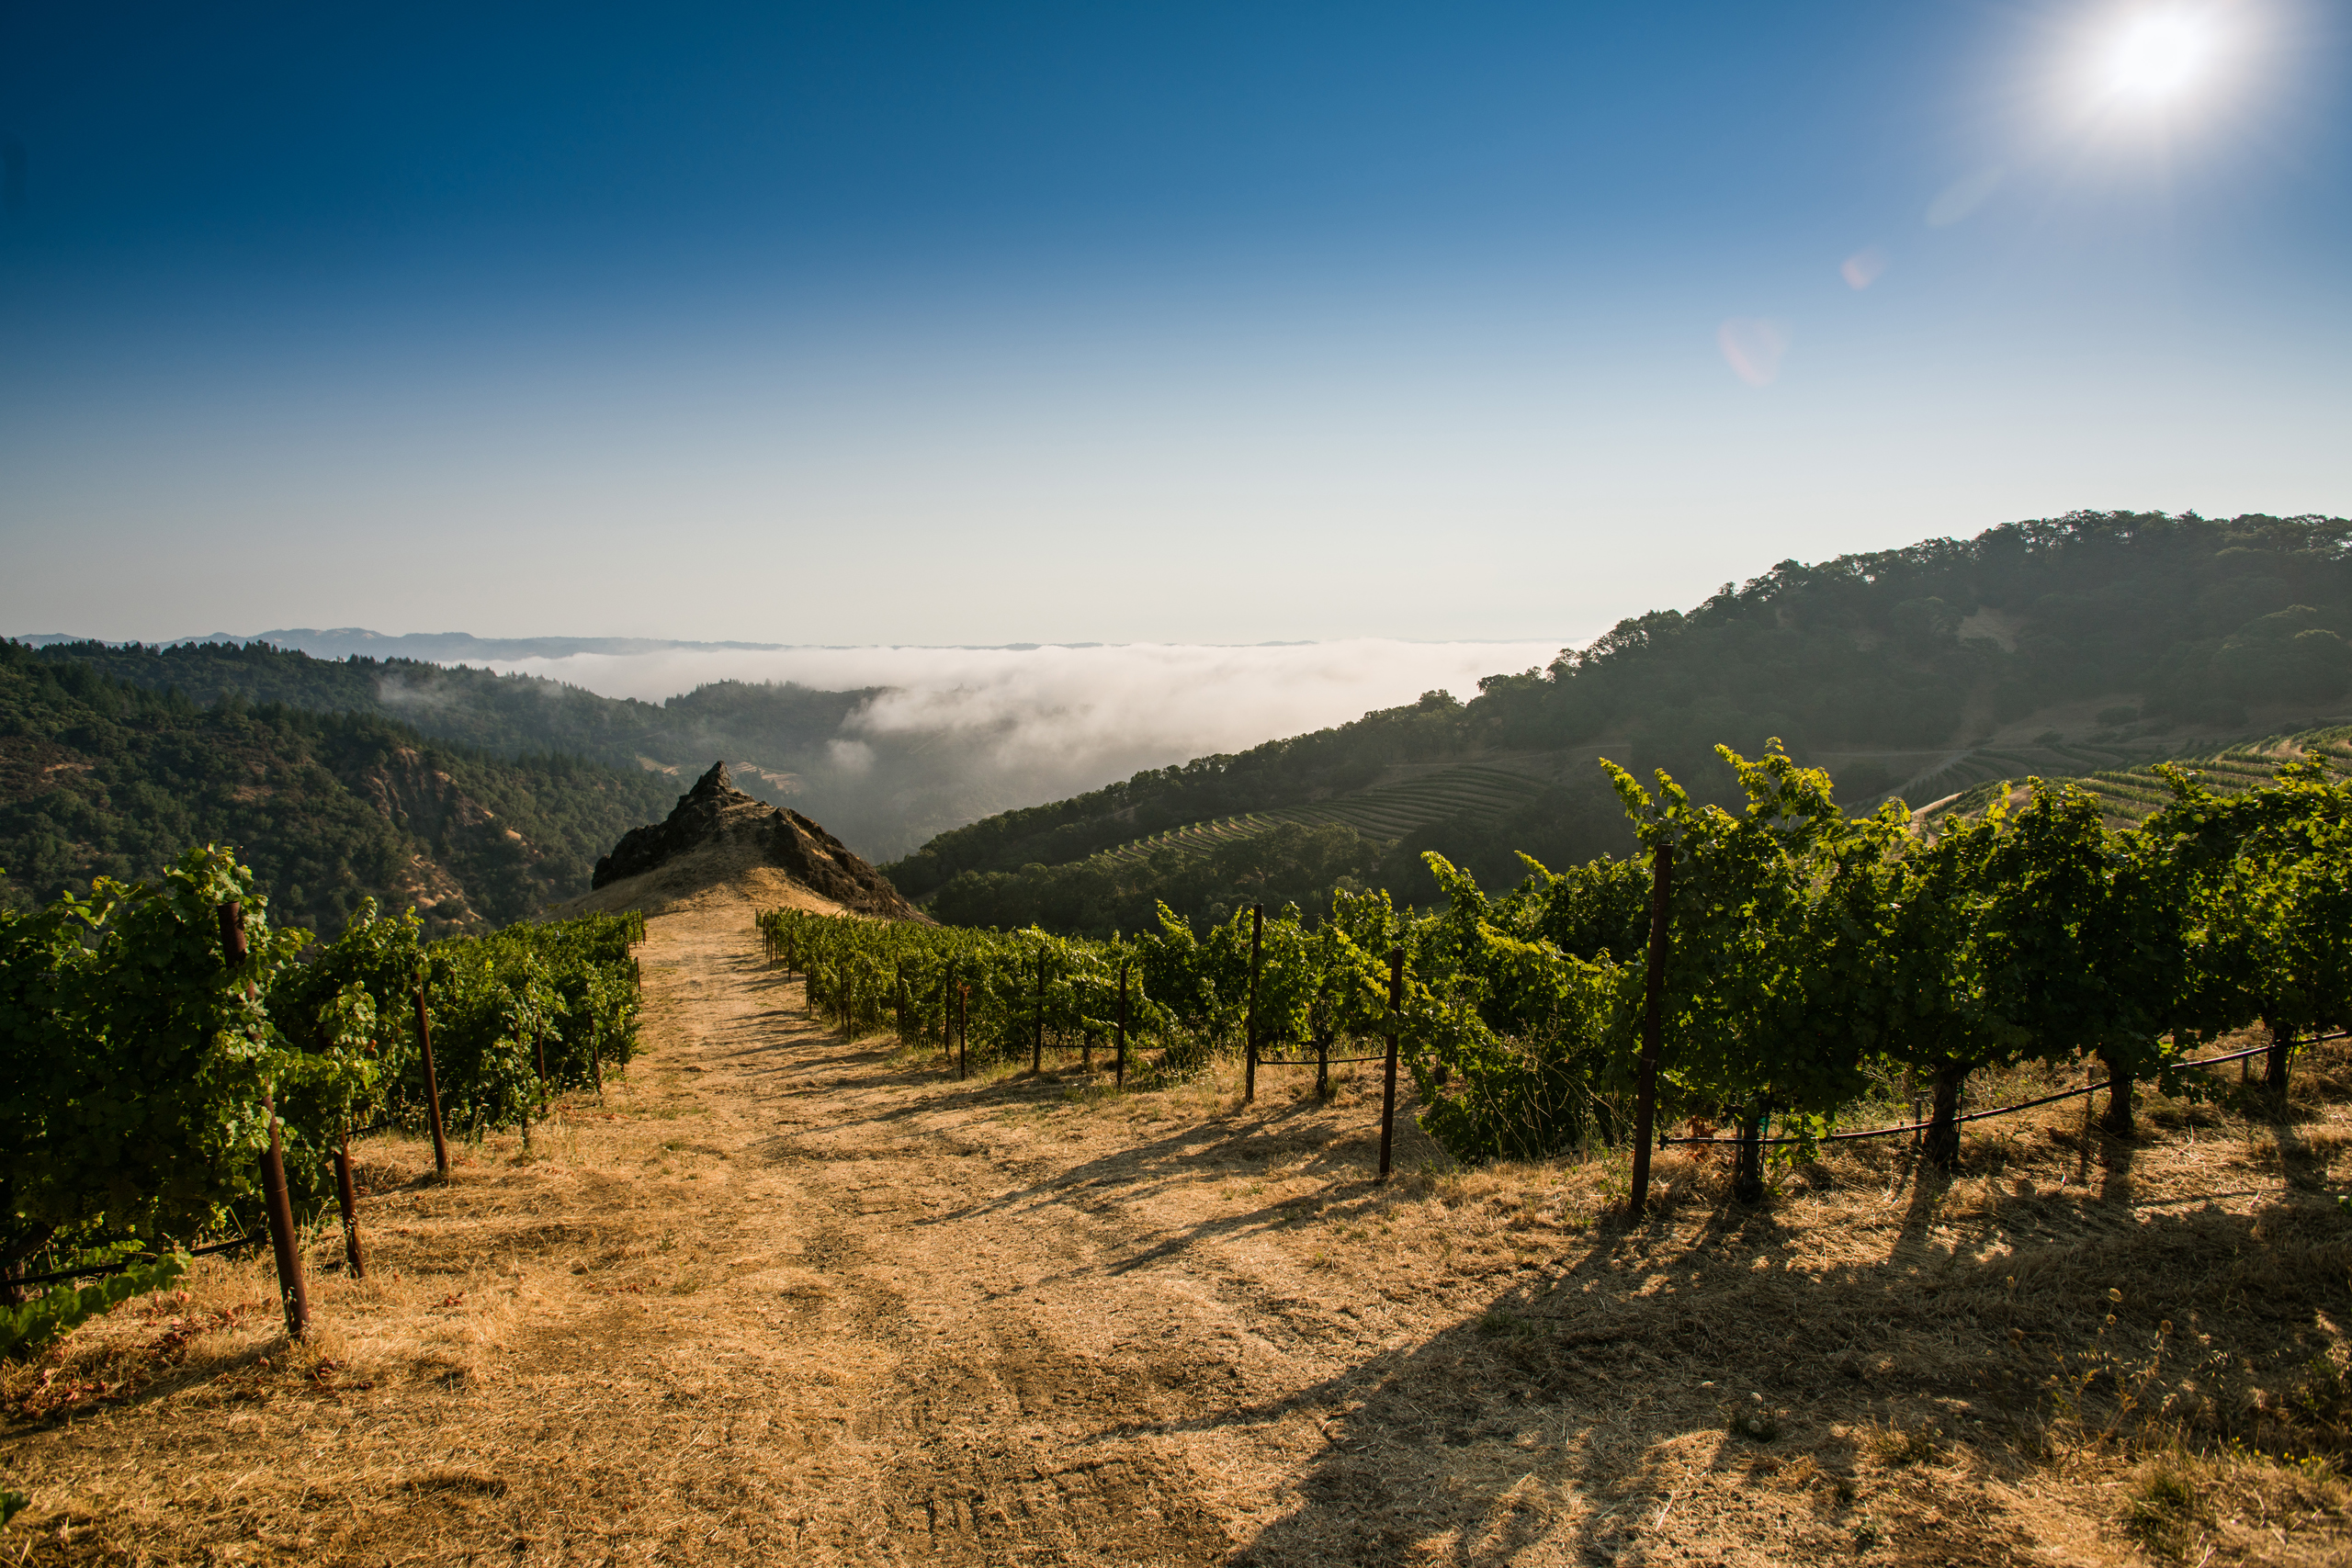 "Chris Howell & Cain Vineyard: Making Wines that Matter," Huffington Post